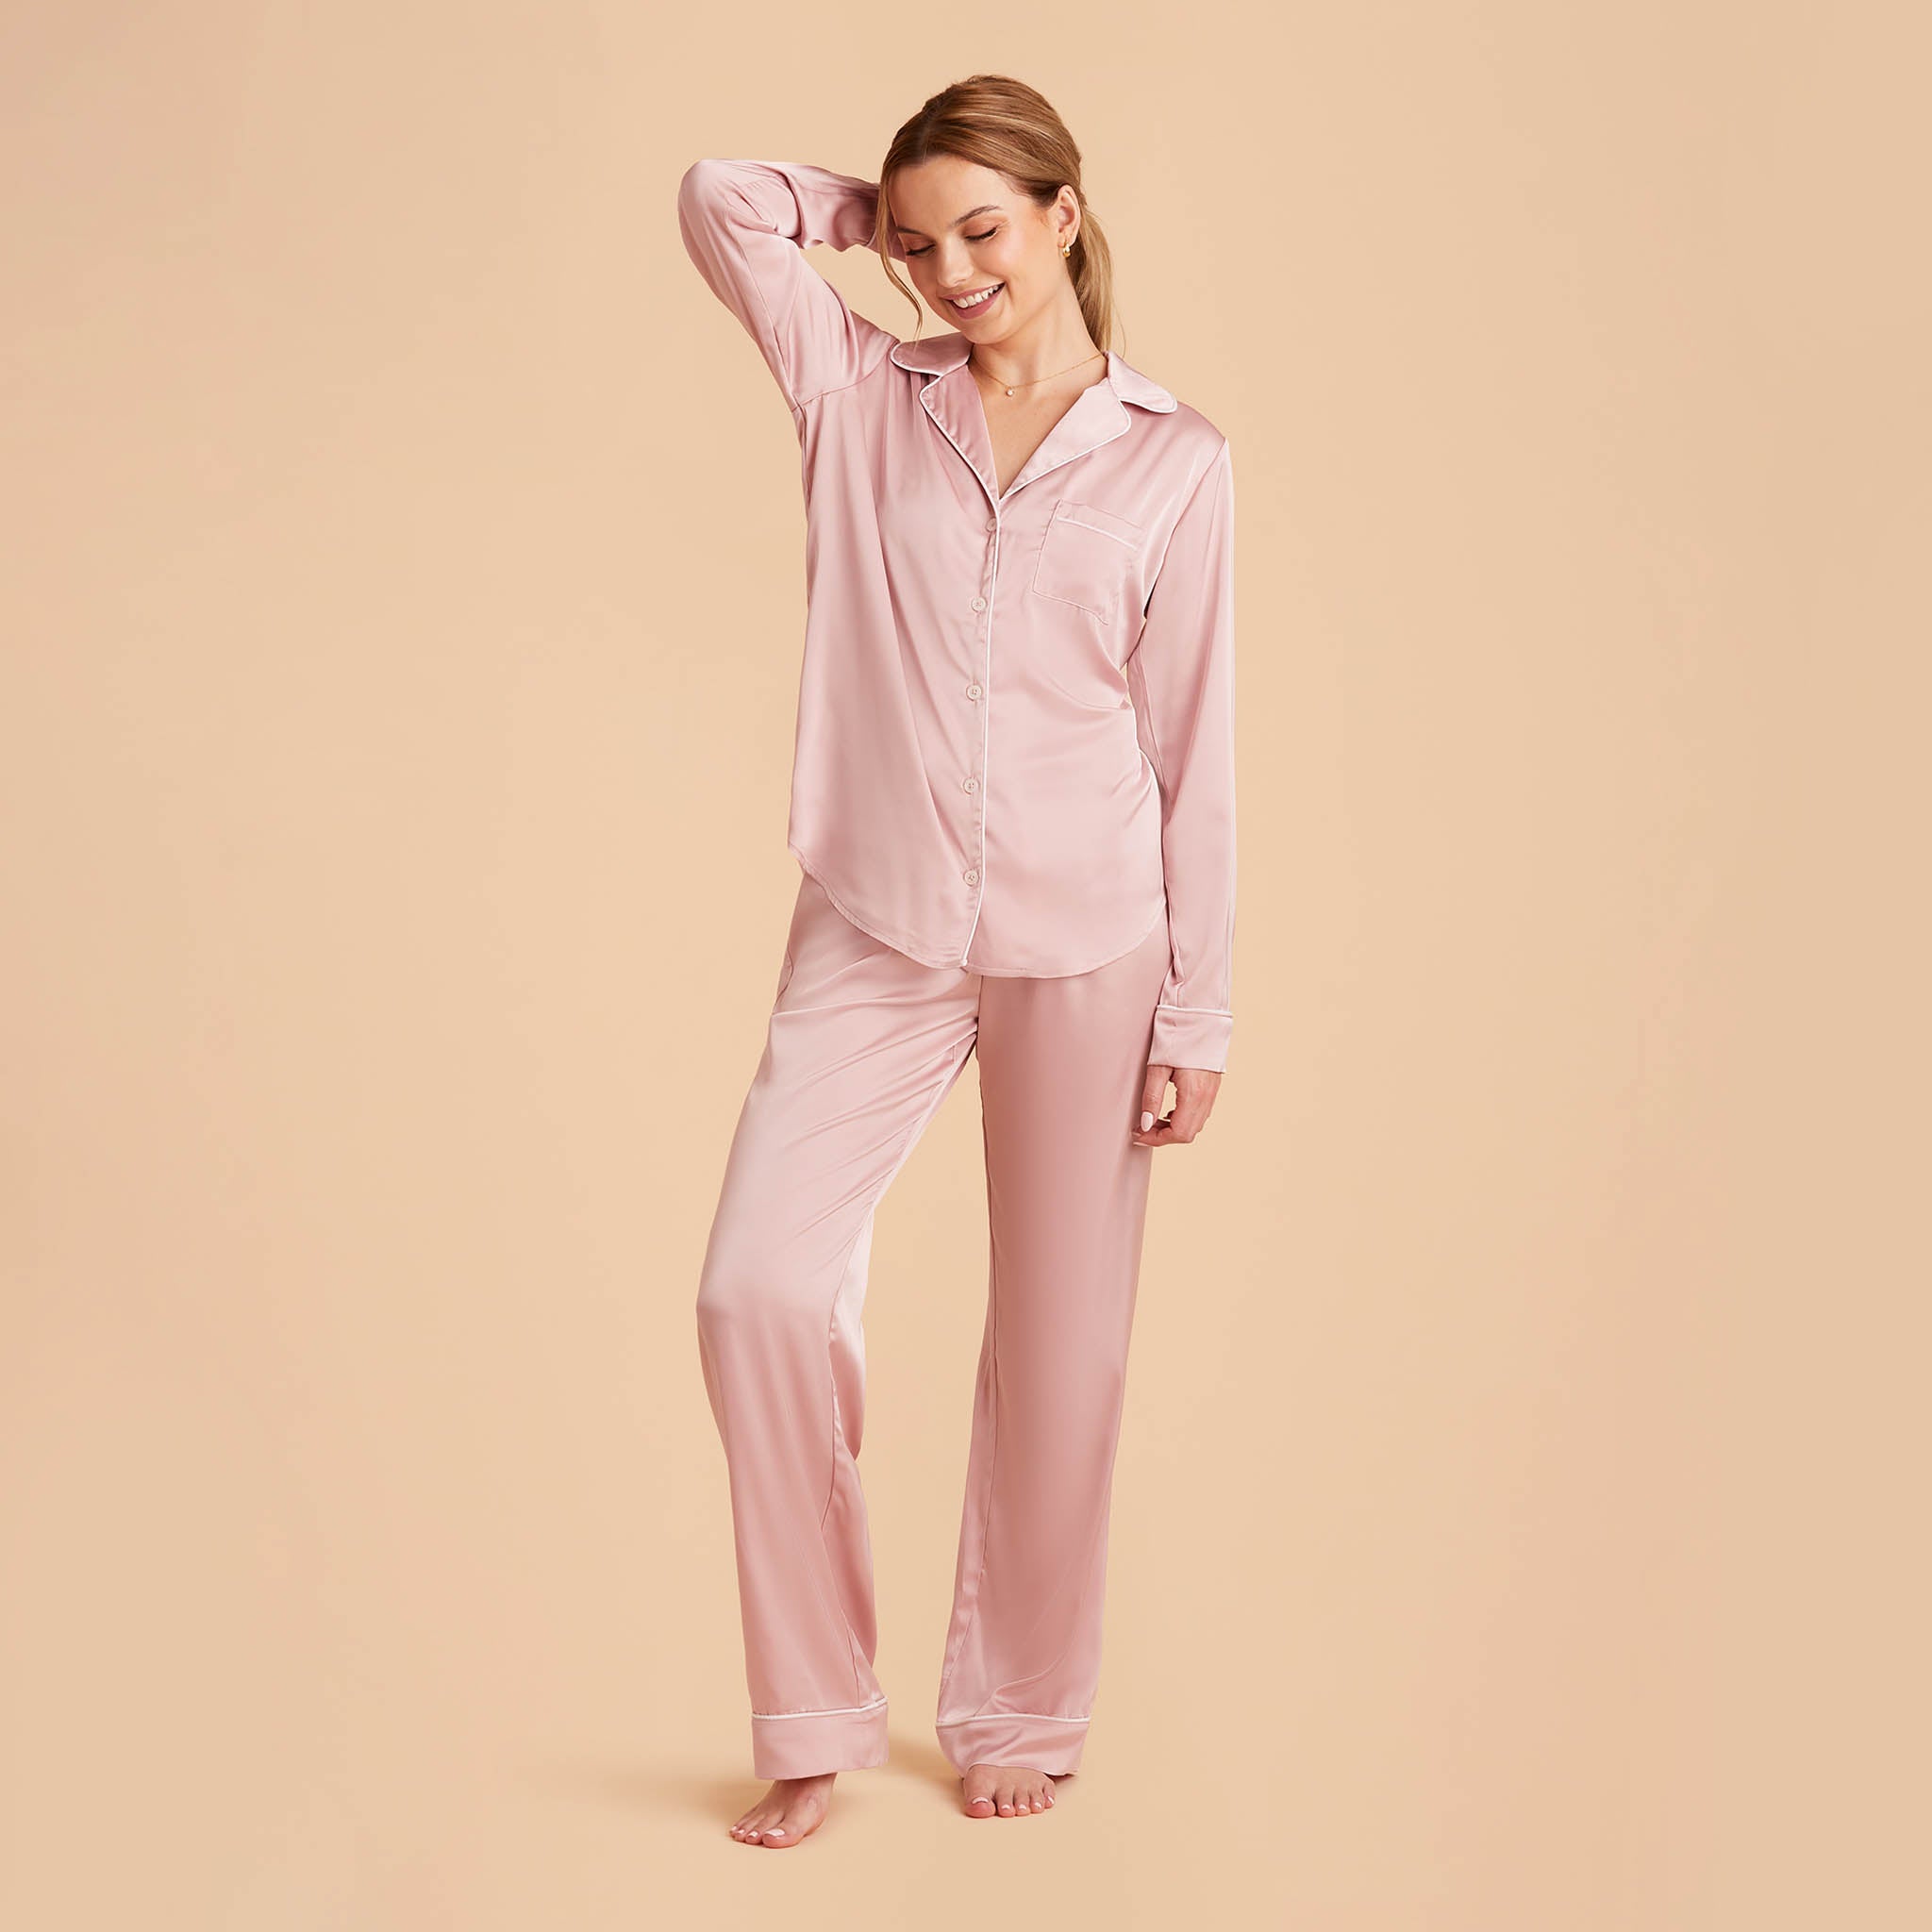 Dusty Pink pjs - custom pjs - satin pajama set - Bridesmaid pink